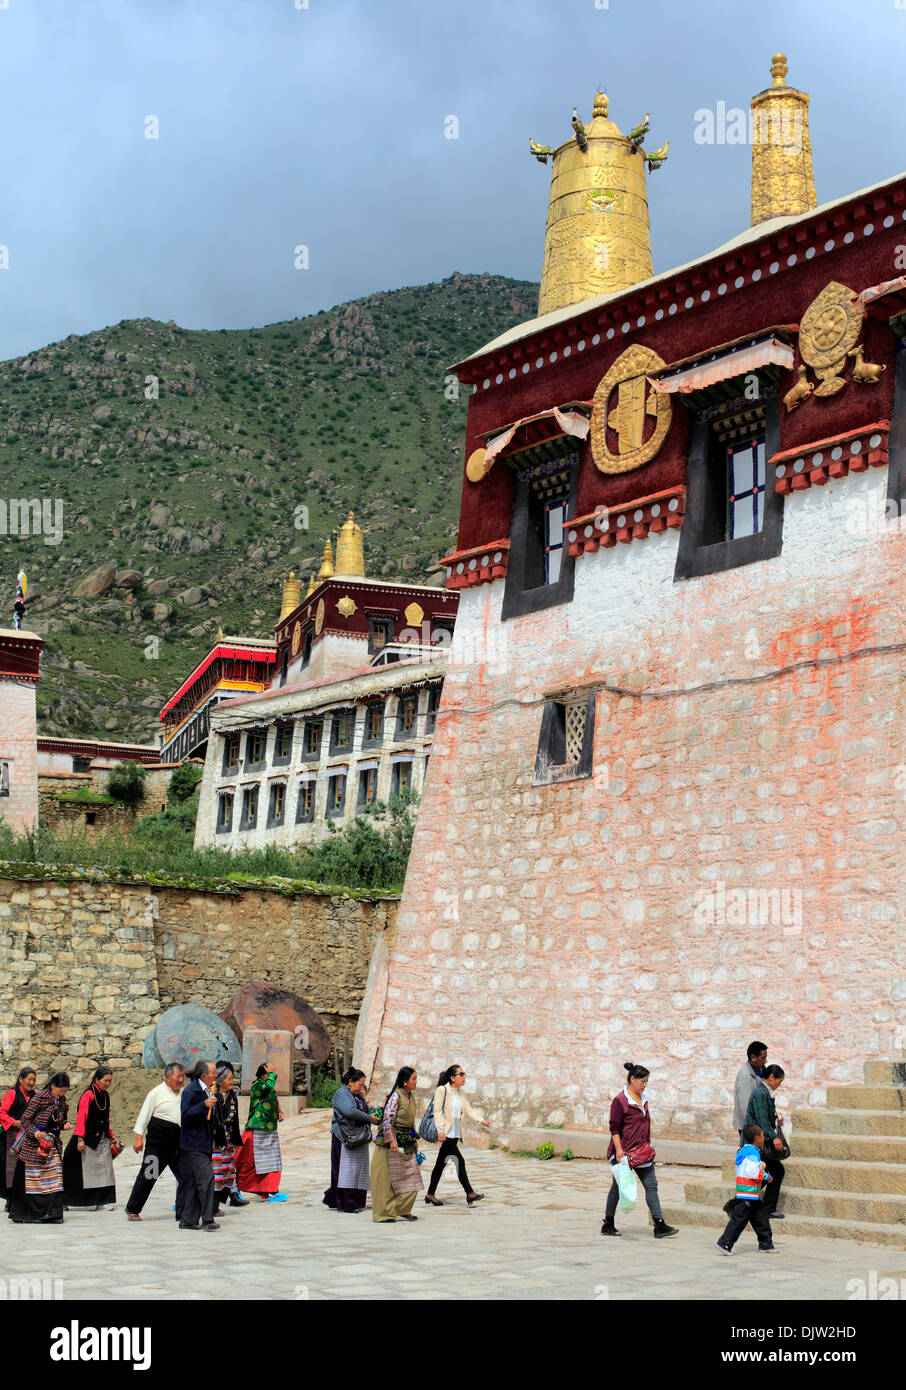 Drepung monastery, Mount Gephel, Lhasa Prefecture, Tibet, China Stock Photo